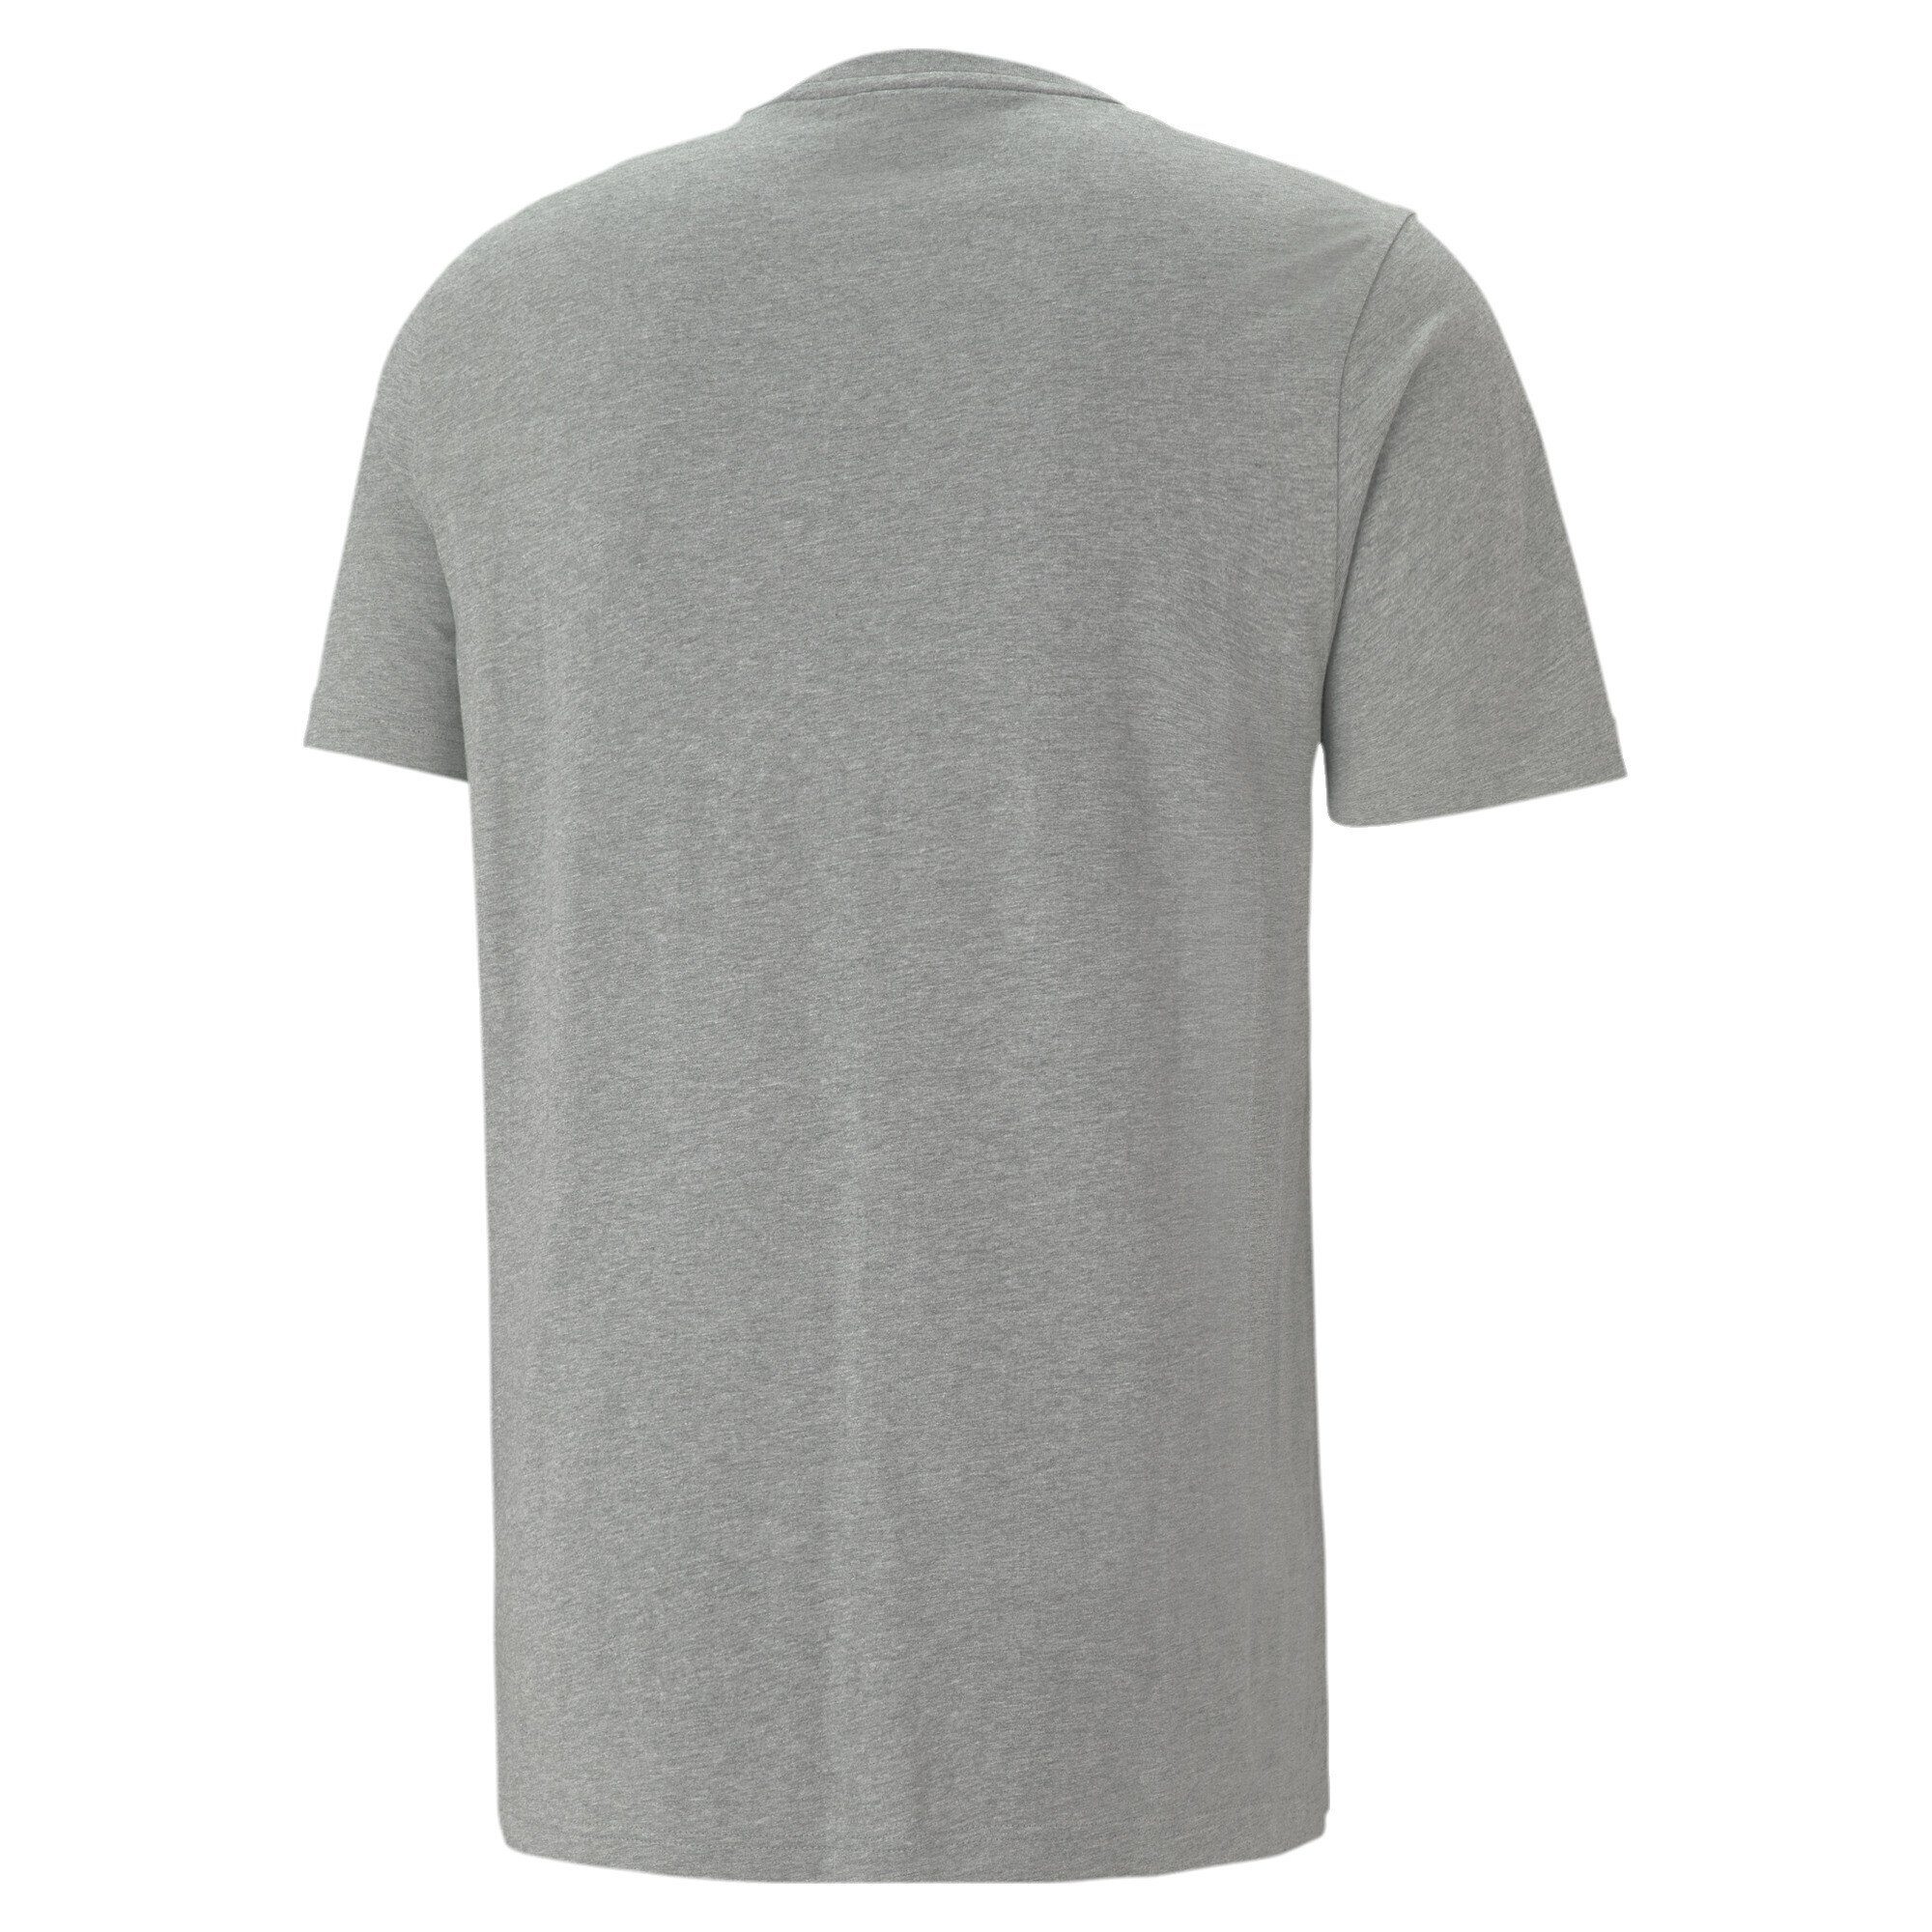 PUMA T-Shirt Classics Logo Medium T-Shirt Heather Herren Gray